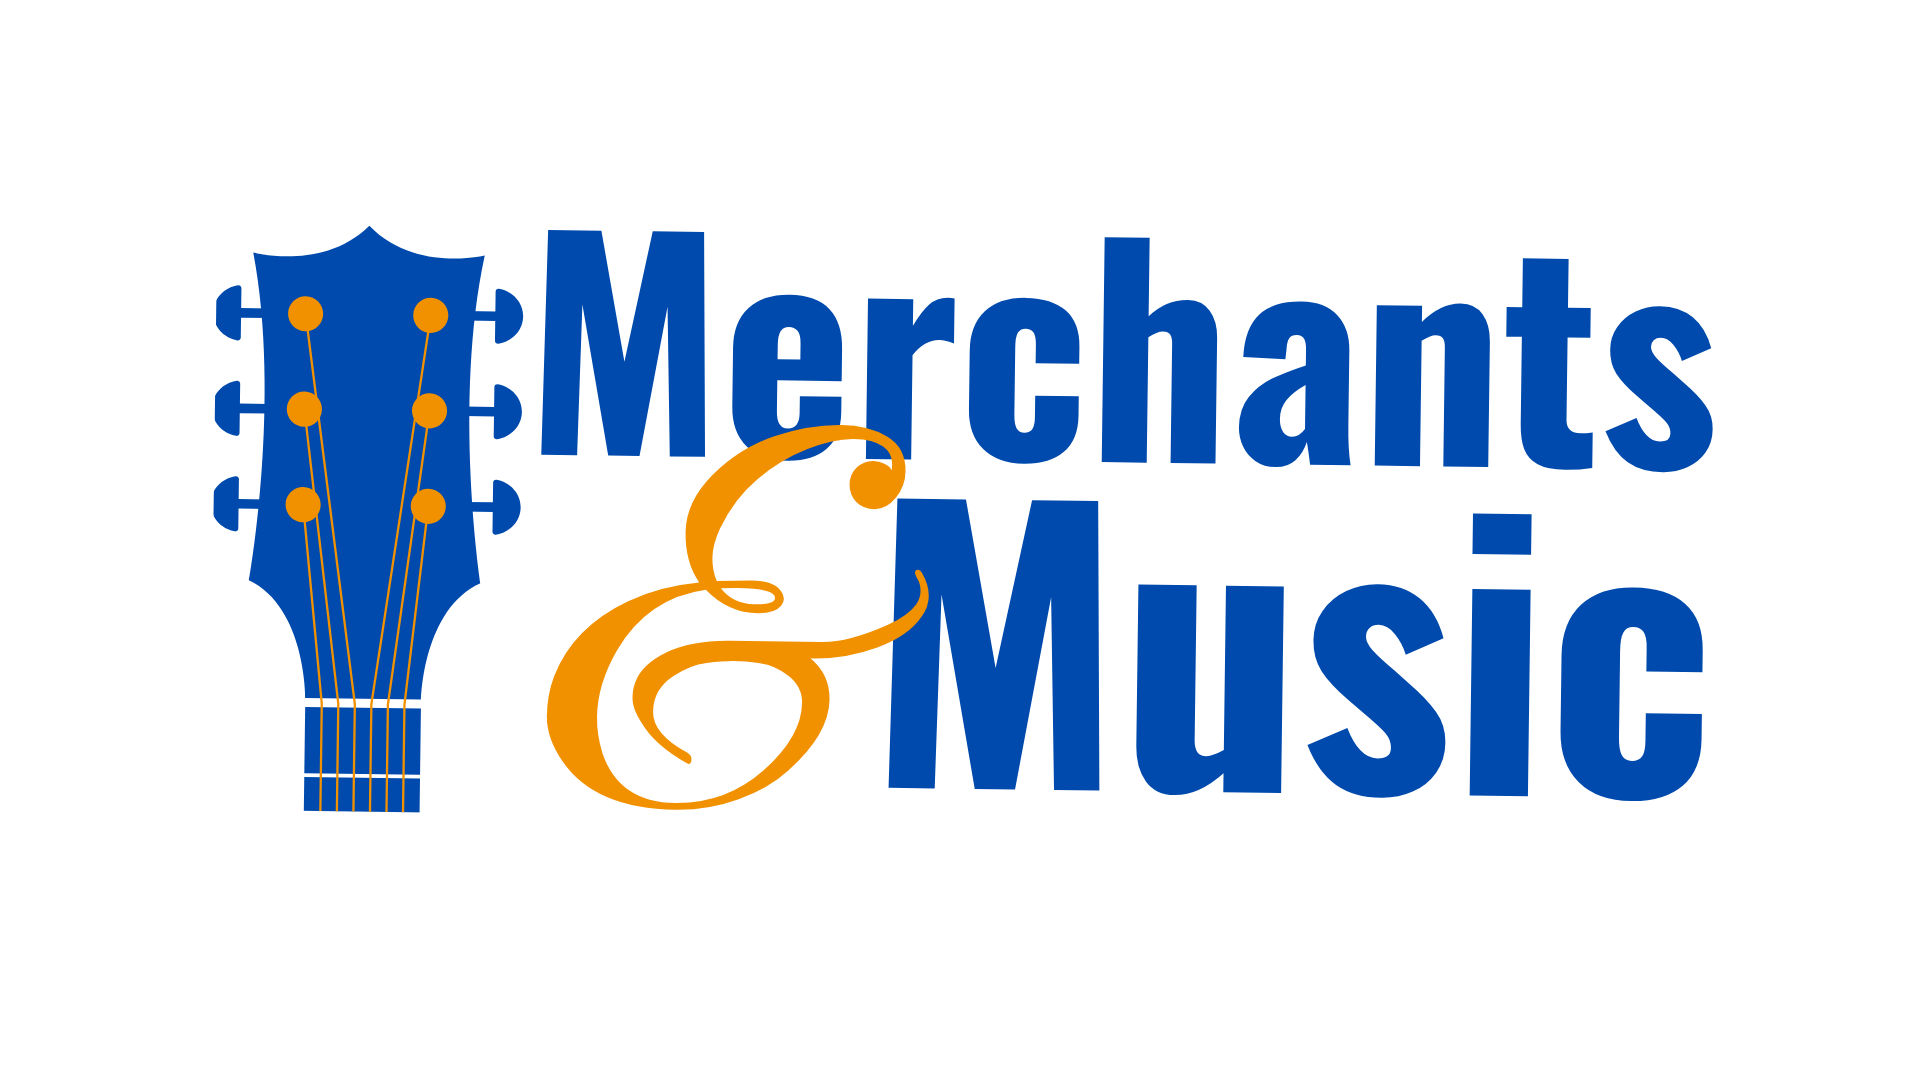 Merchants &amp; Music Festival